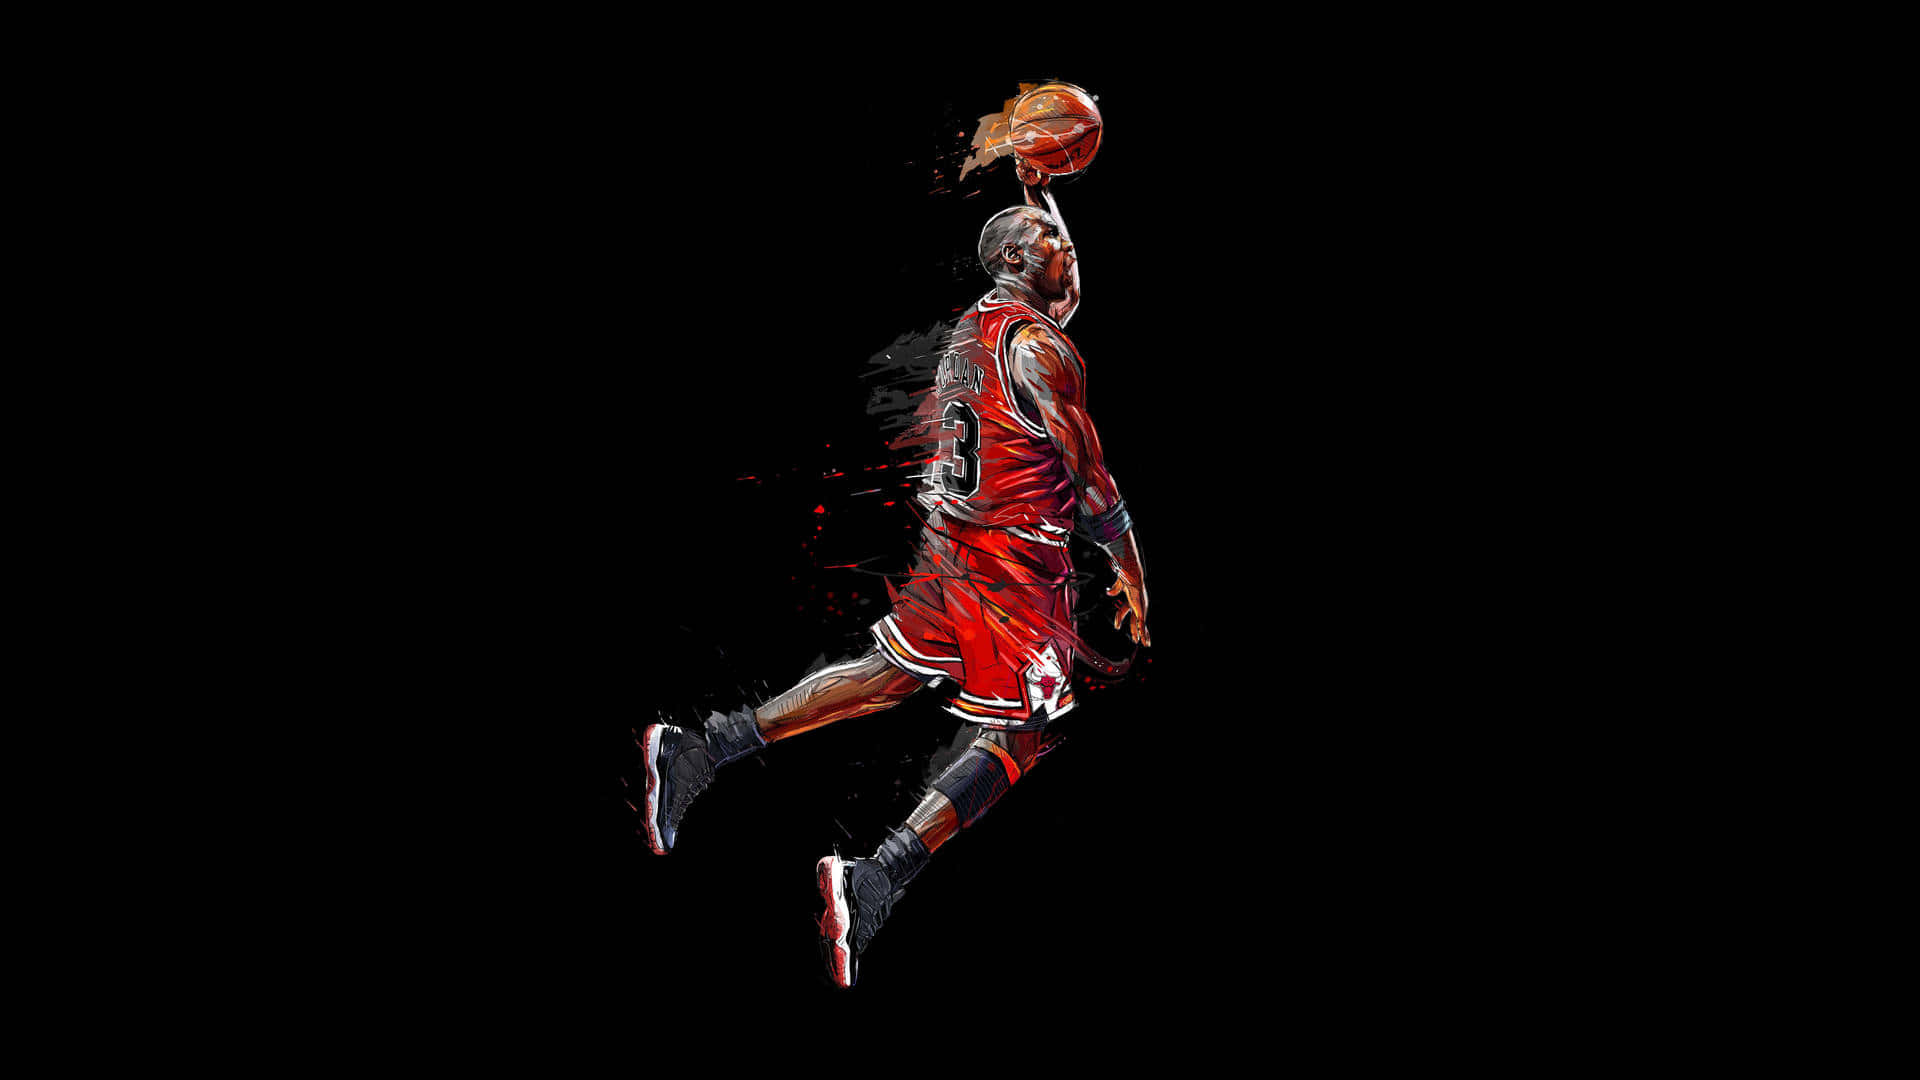 1080p Basketball Background Wallpaper